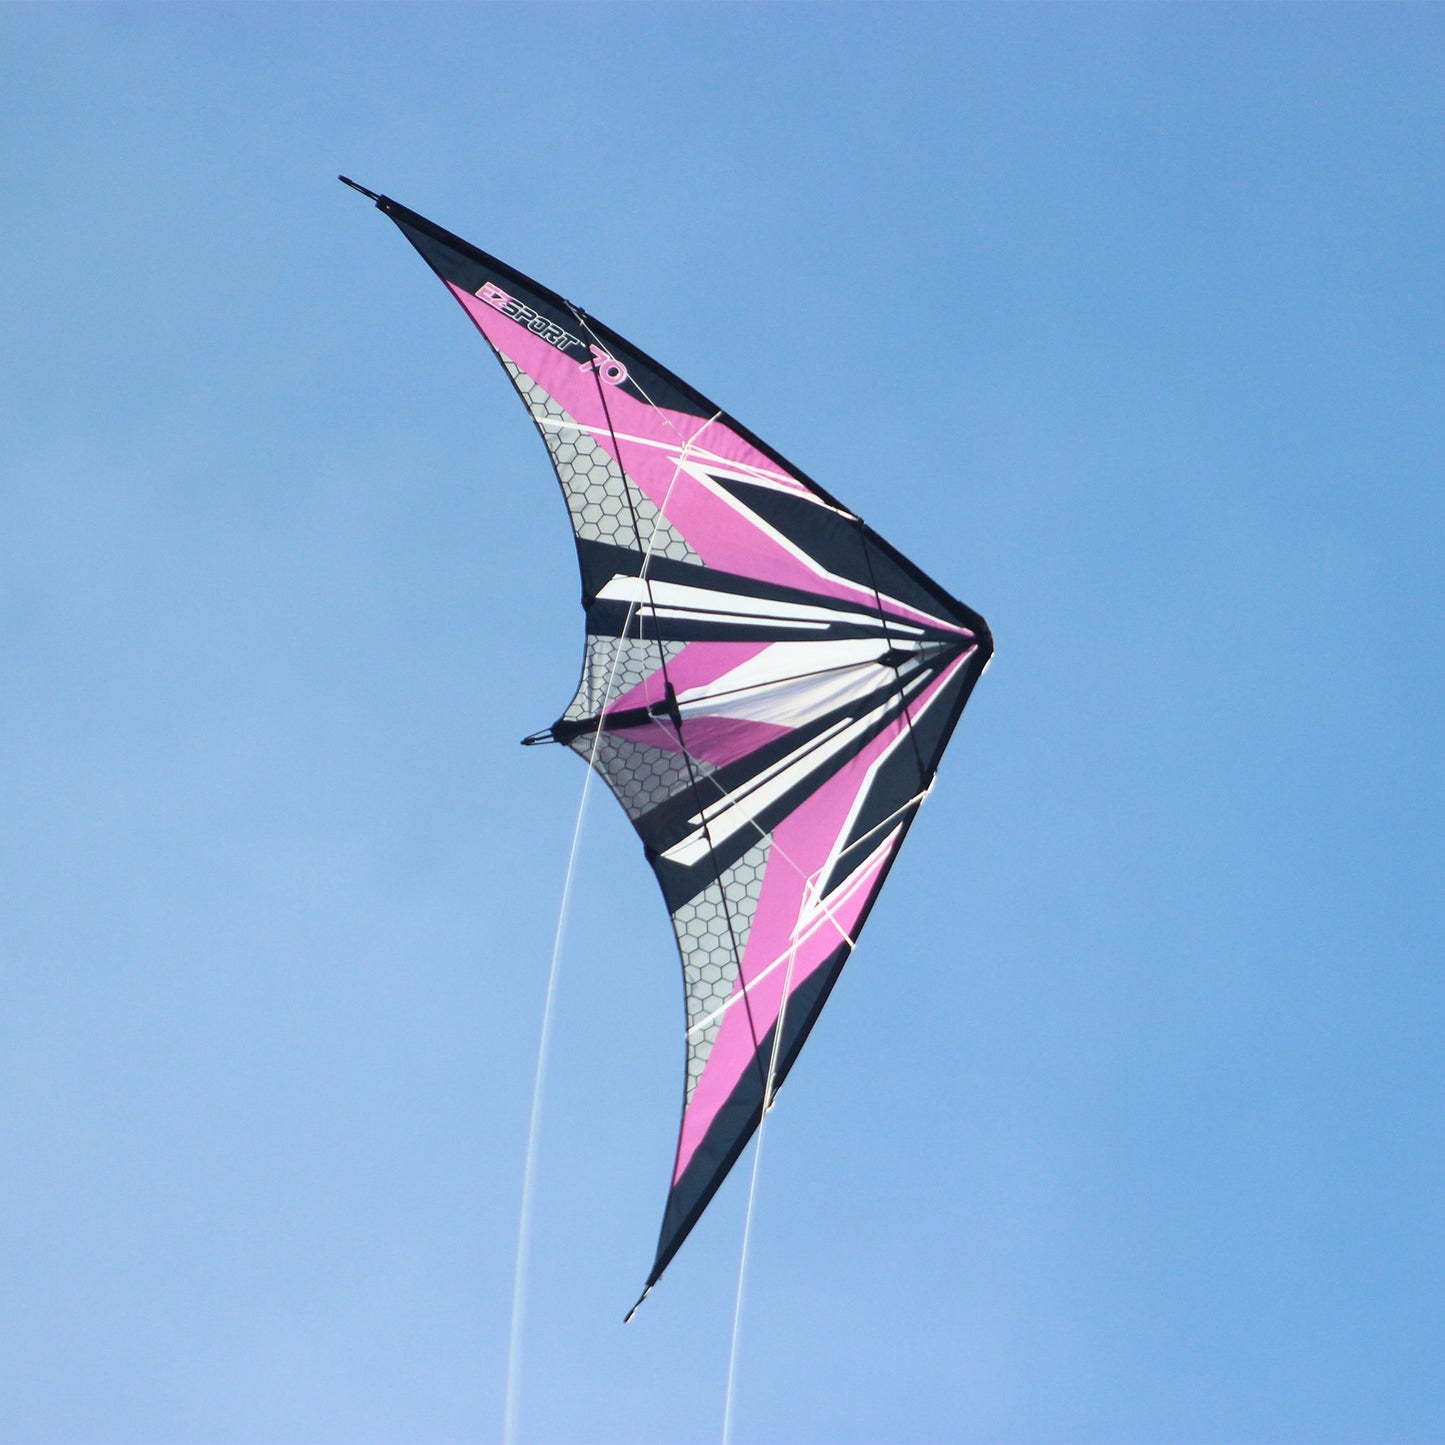 WindNSun EZ Sport 70 Dual Control Sport Kite Purple Hexagon Nylon Kite photo of product in use